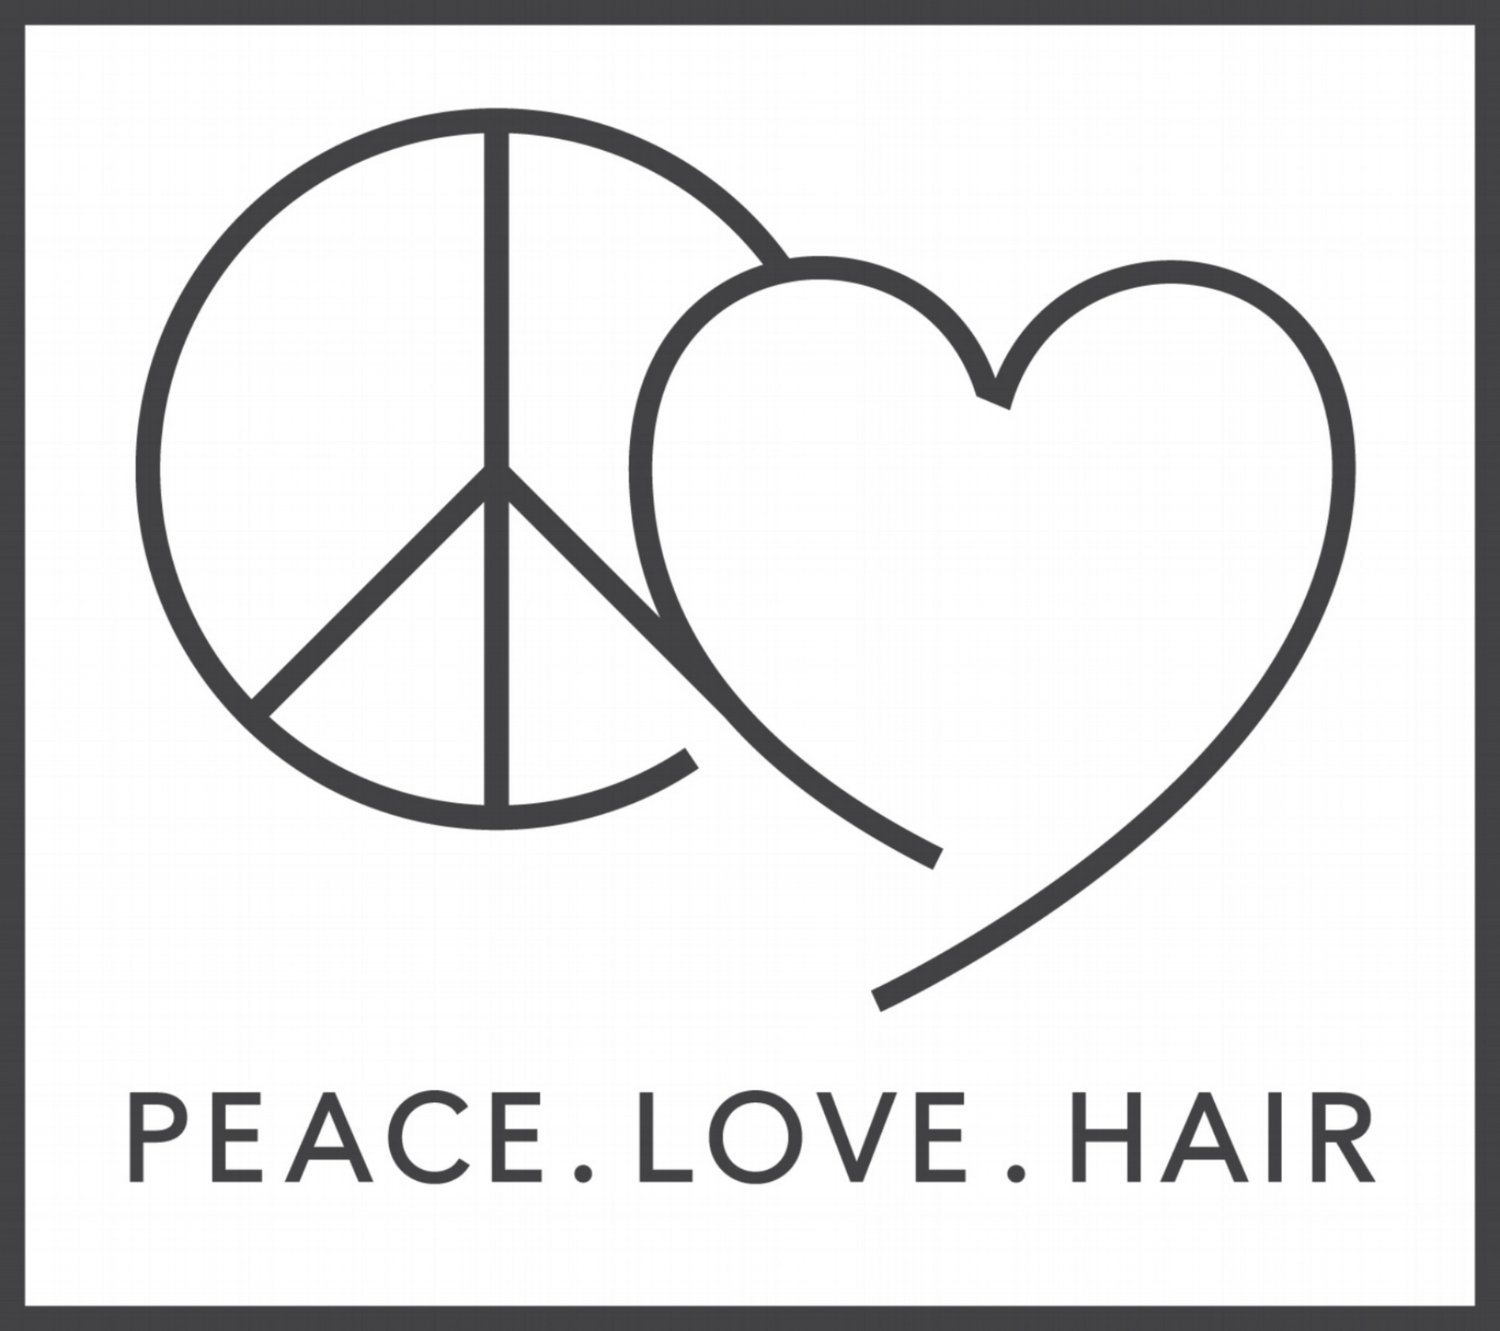 Peace. Love. Hair.